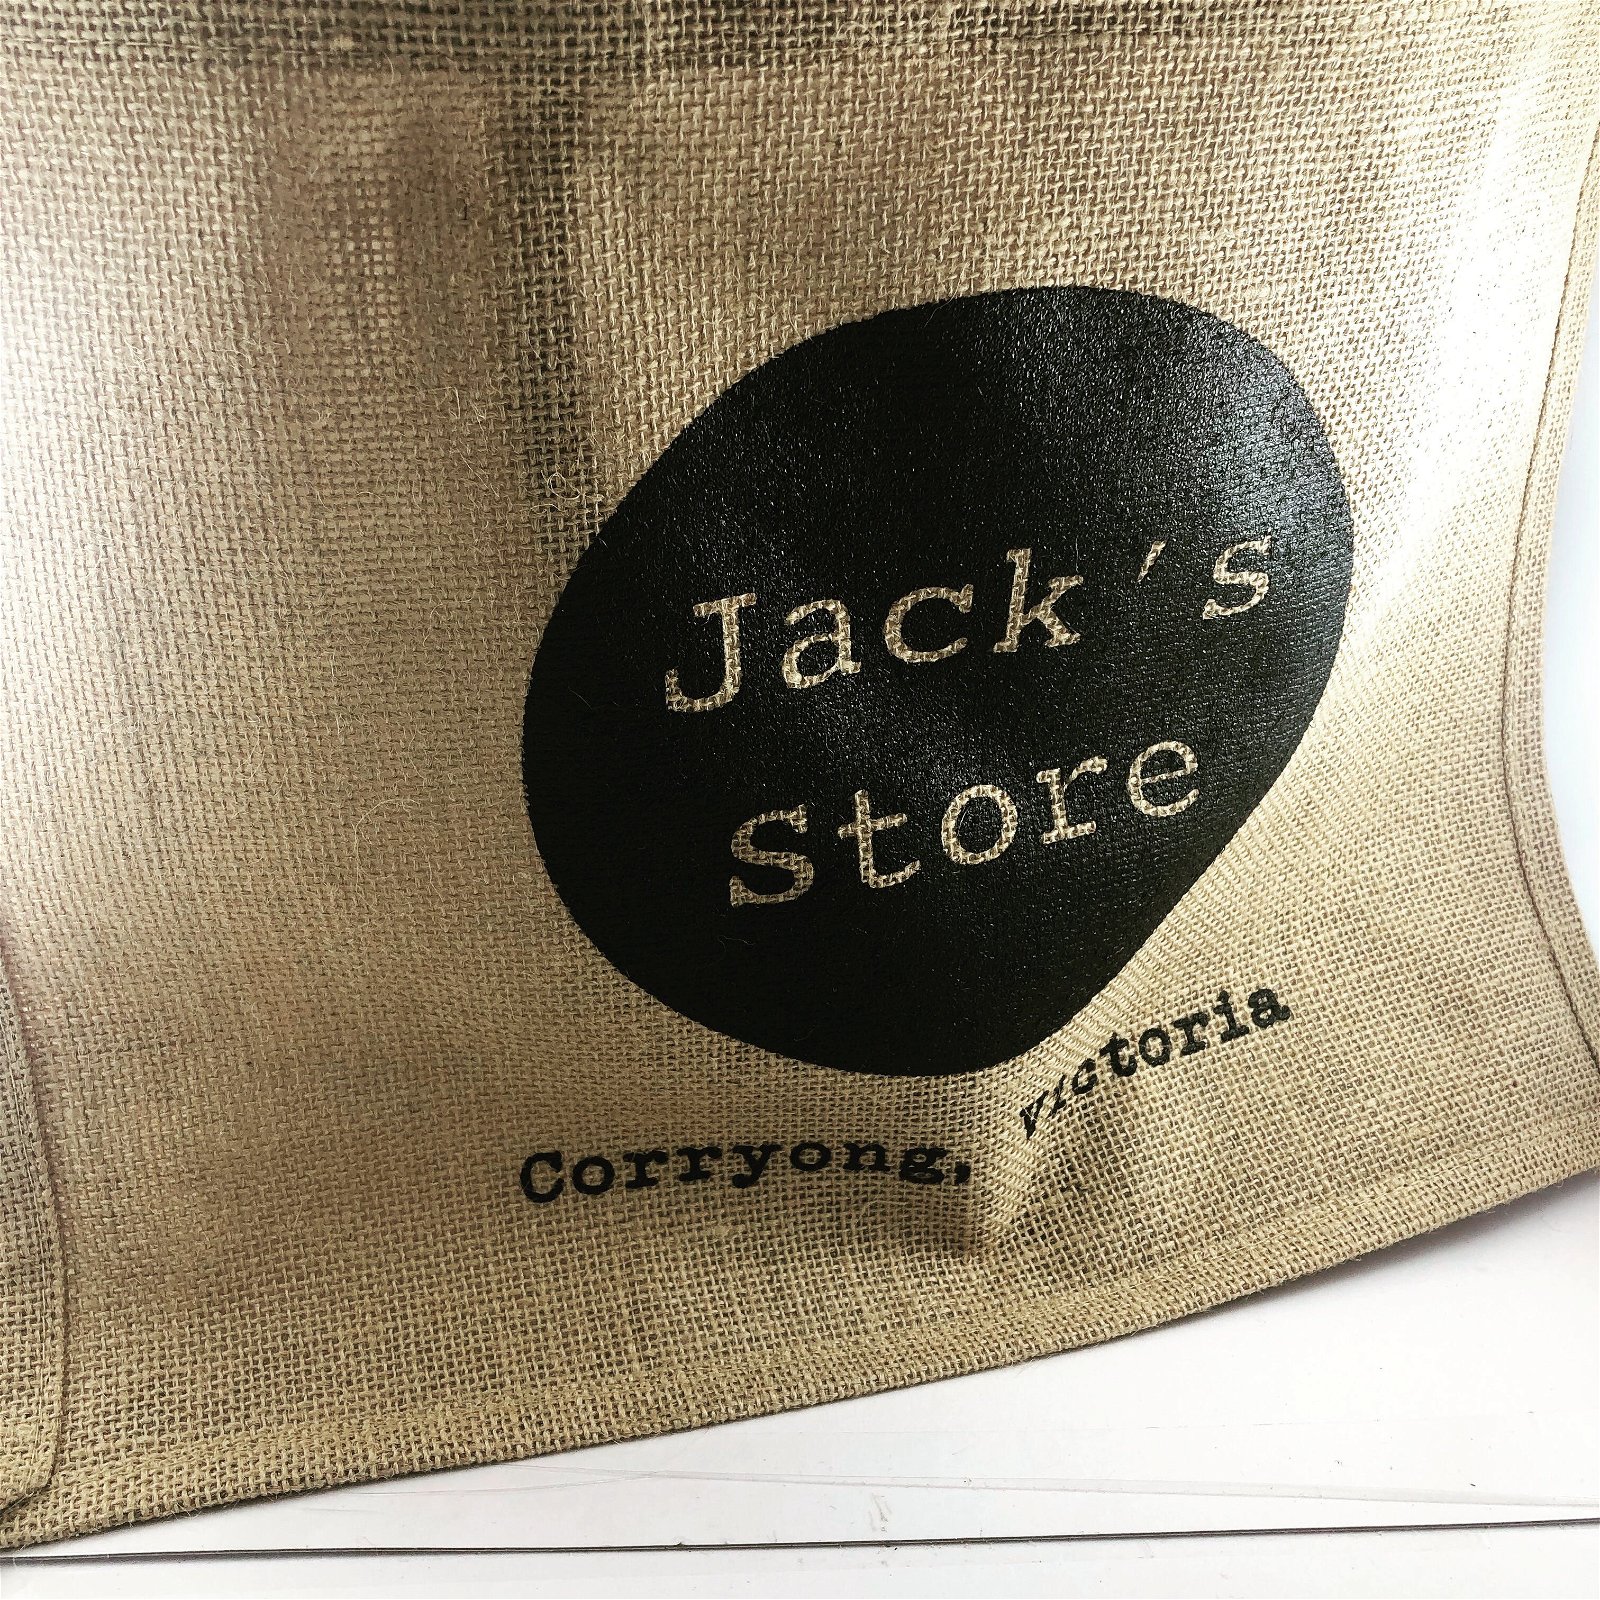 Jack's Store - Great Ocean Road Tourism